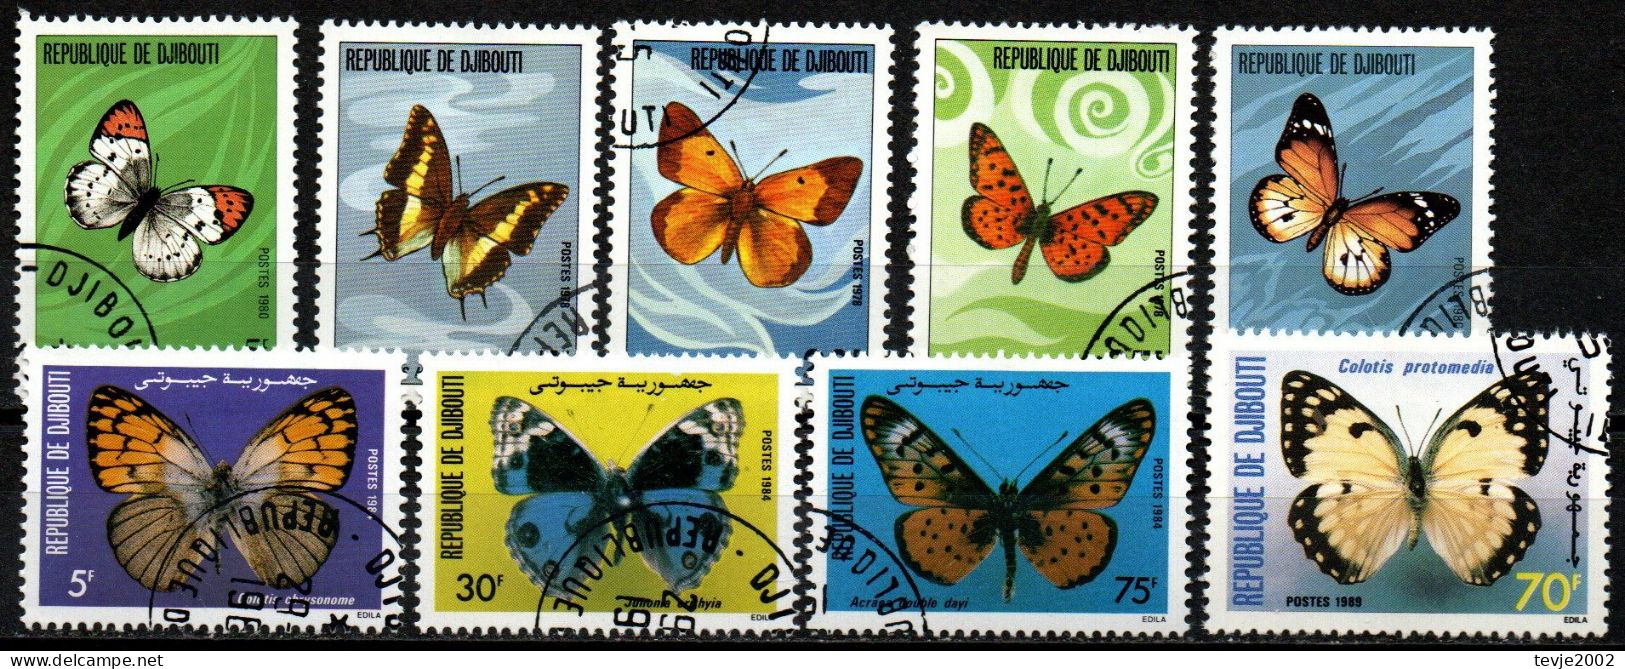 Dschibuti - Lot Aus 1978 - 1989 - Gestempelt Used - Tiere Animals Schmetterlinge Butterflies - Butterflies